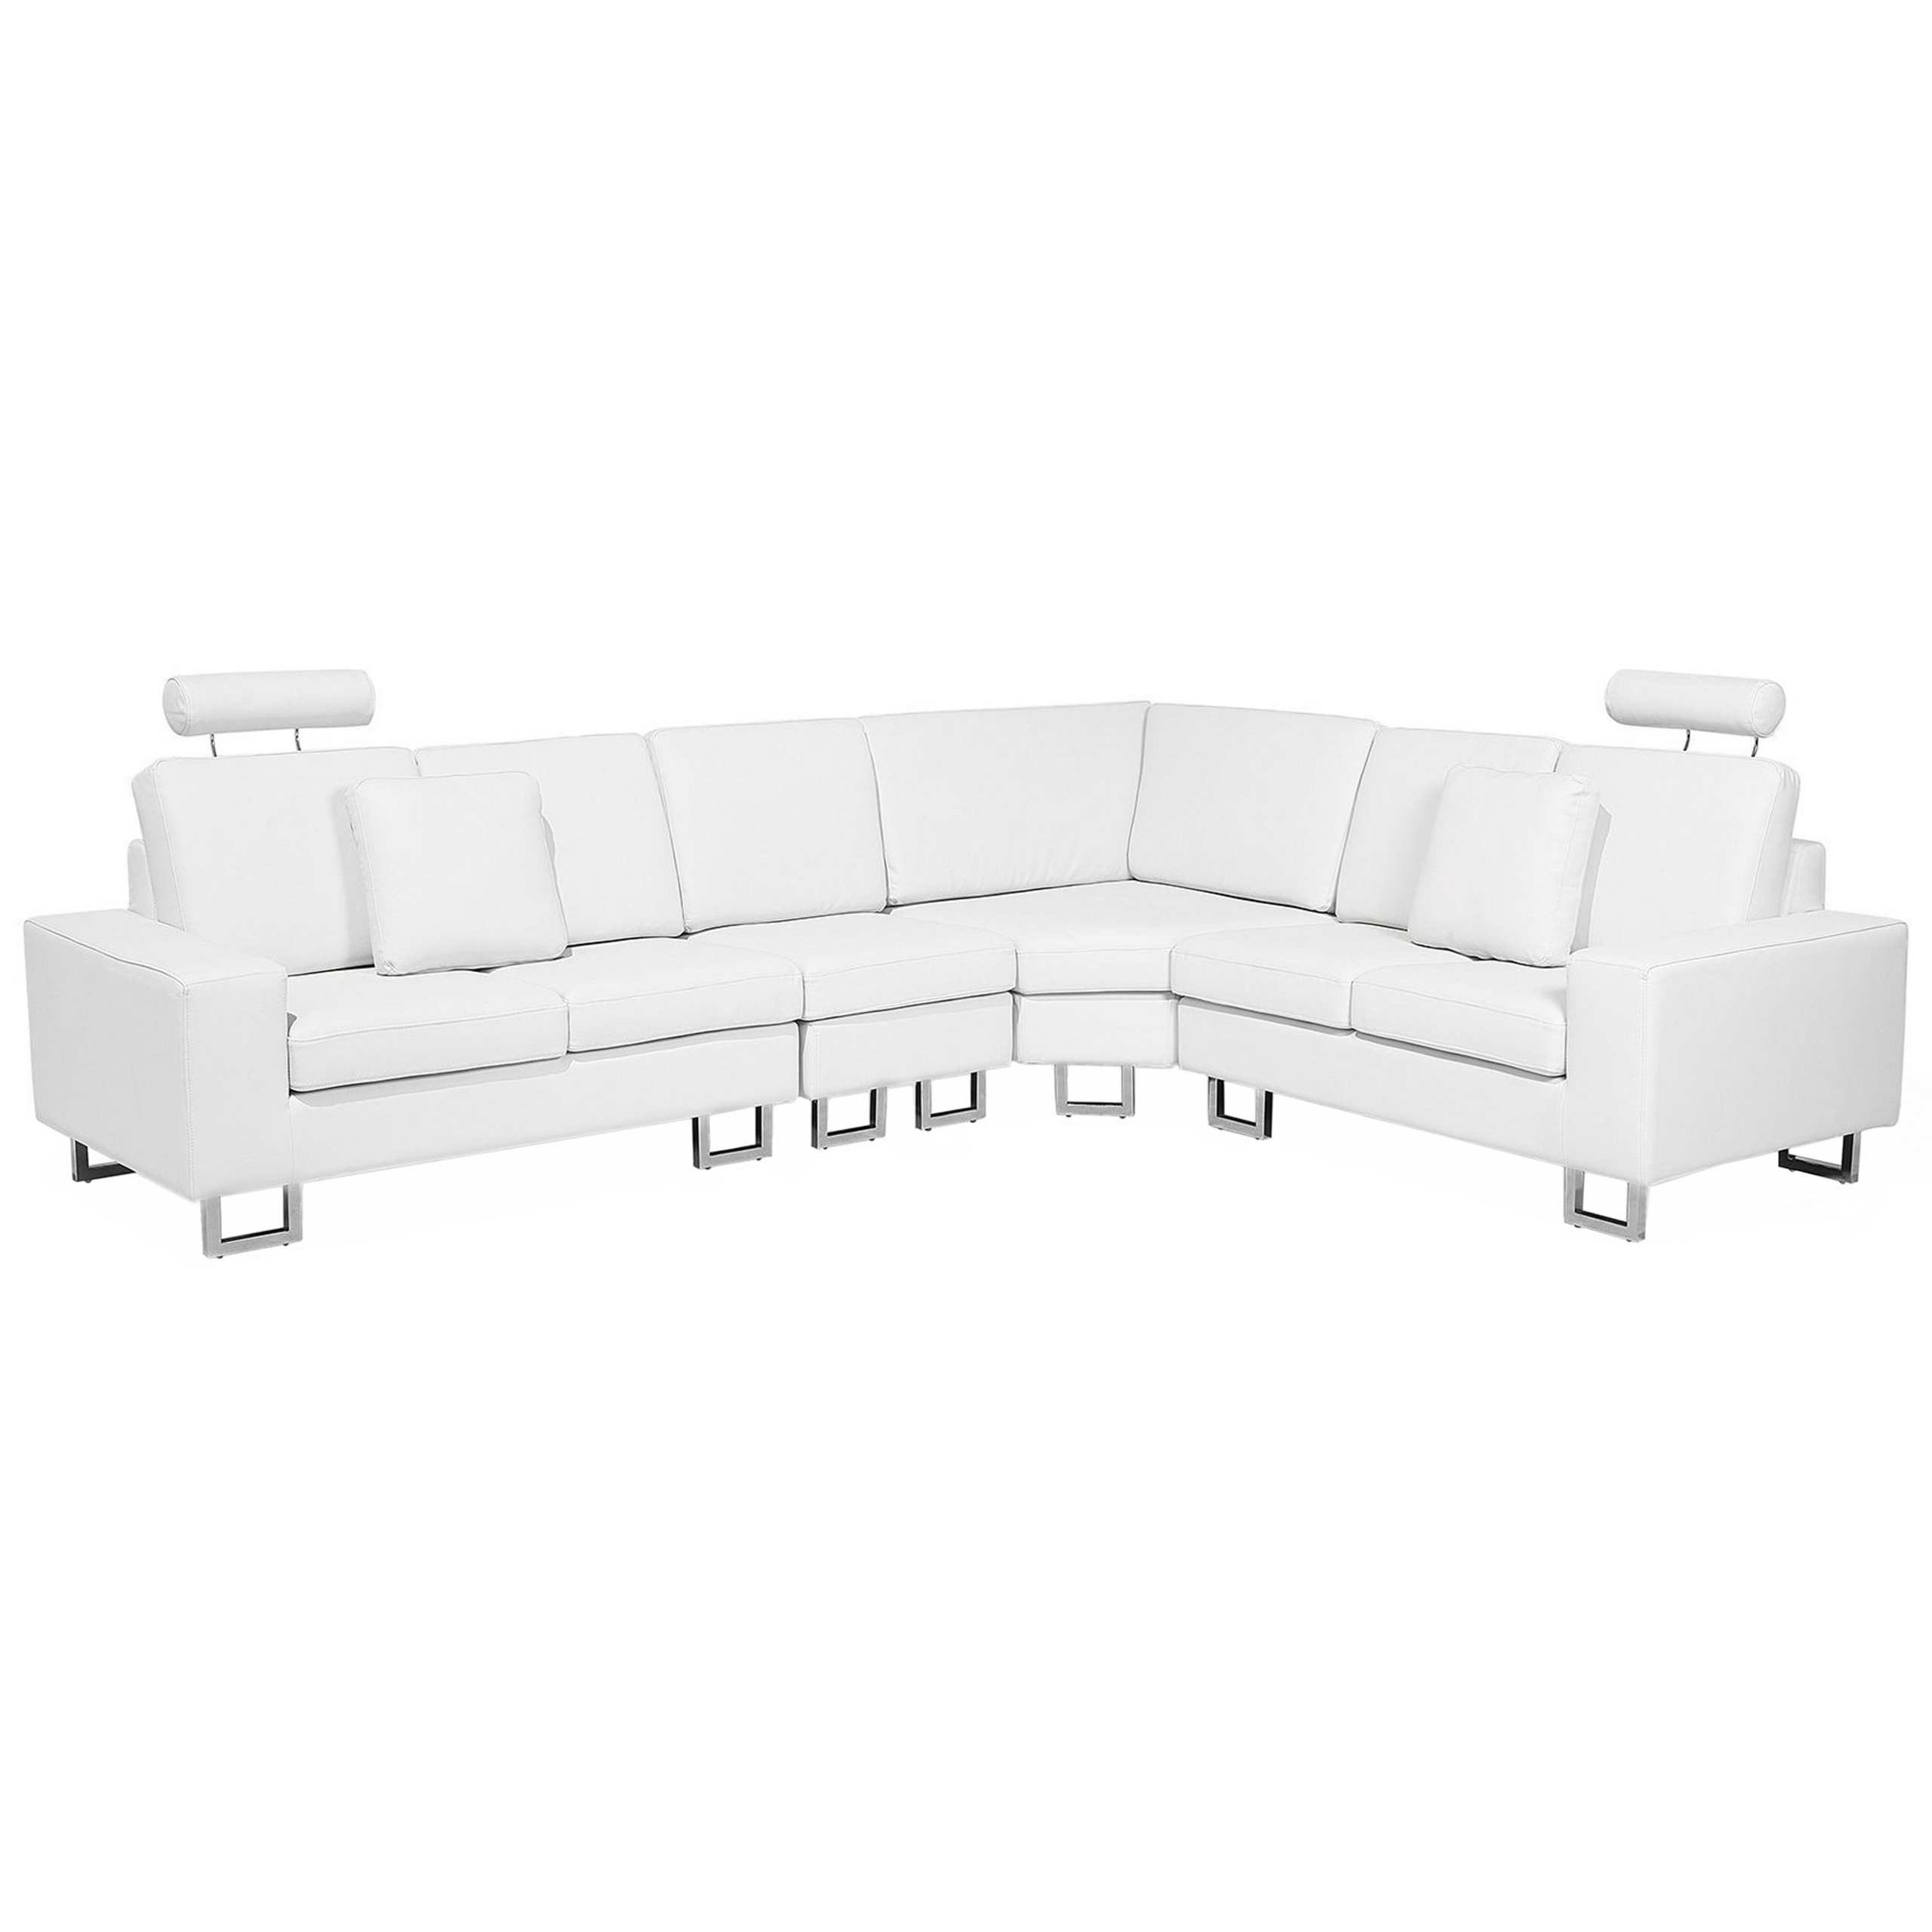 Beliani Corner Sofa White Leather Upholstery Left Hand Orientation with Adjustable Headrests